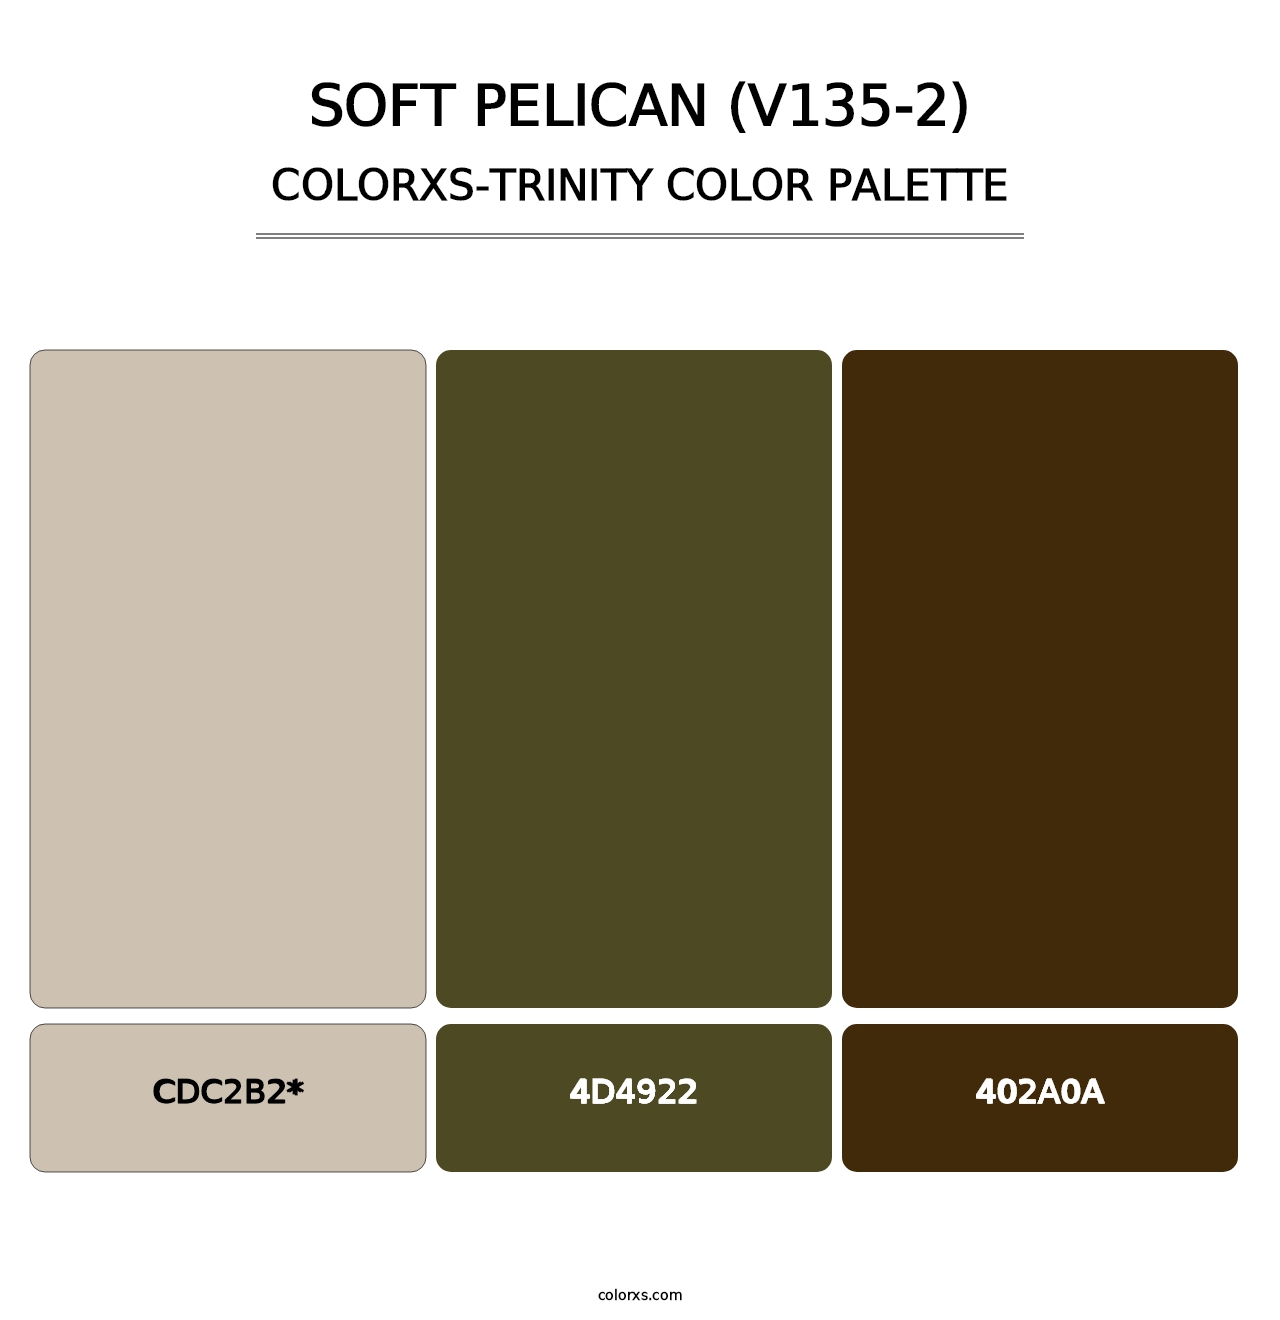 Soft Pelican (V135-2) - Colorxs Trinity Palette